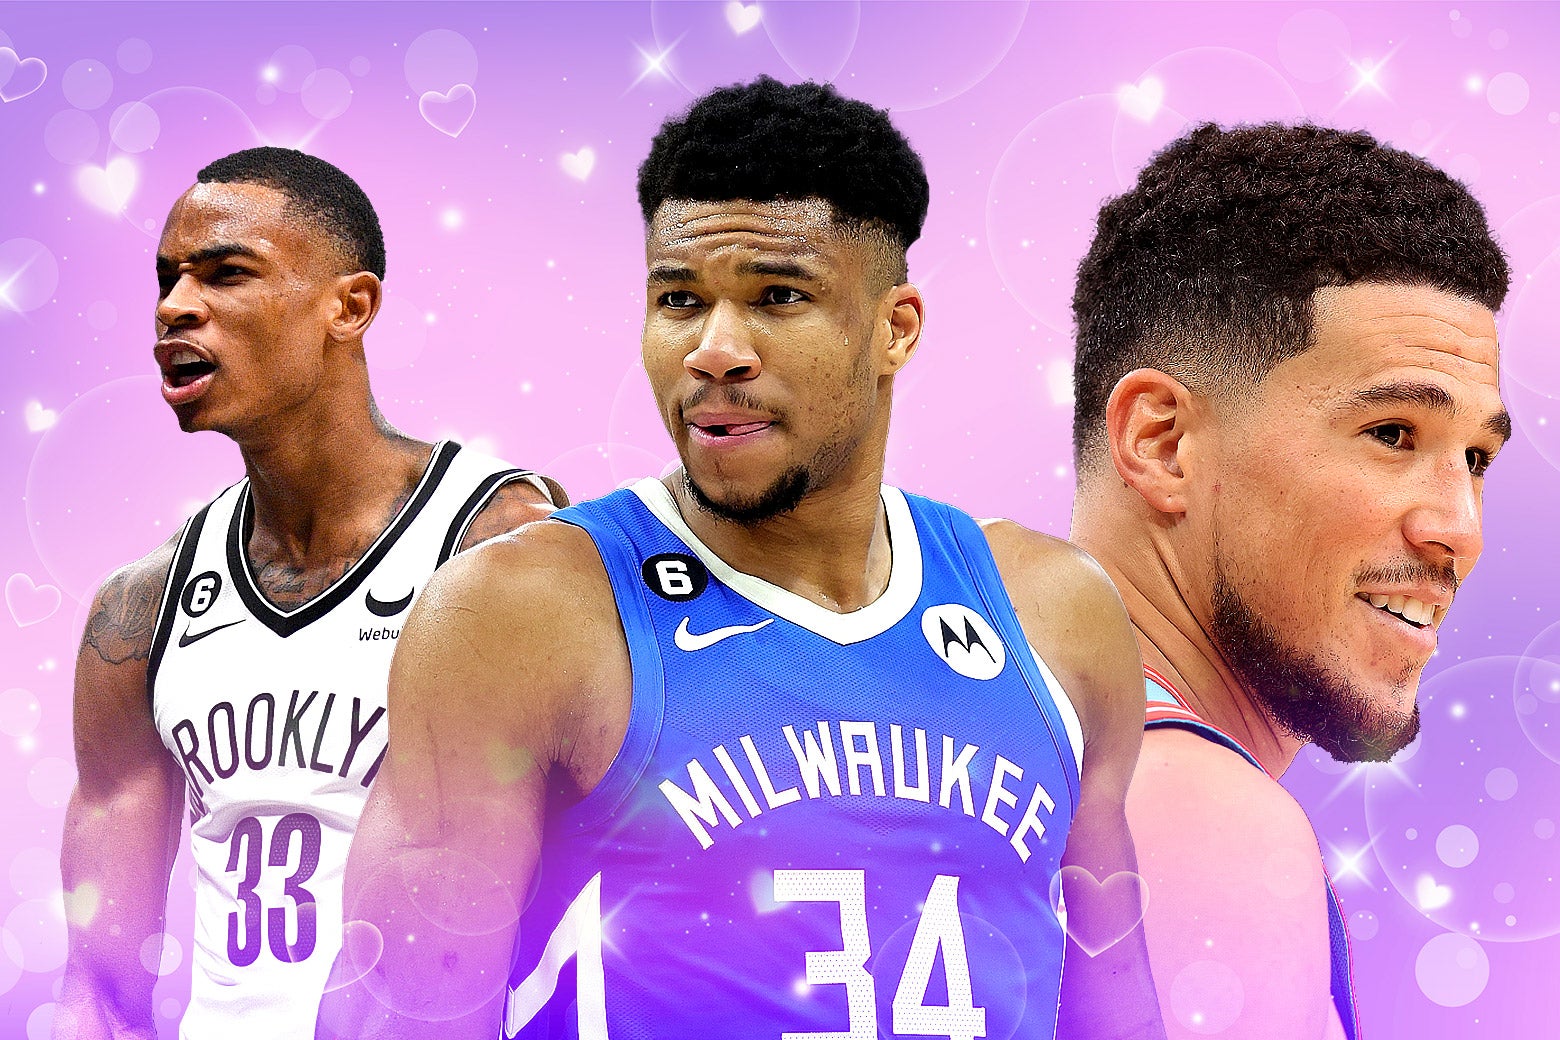 Beautiful NBA players over a purple-heart background.